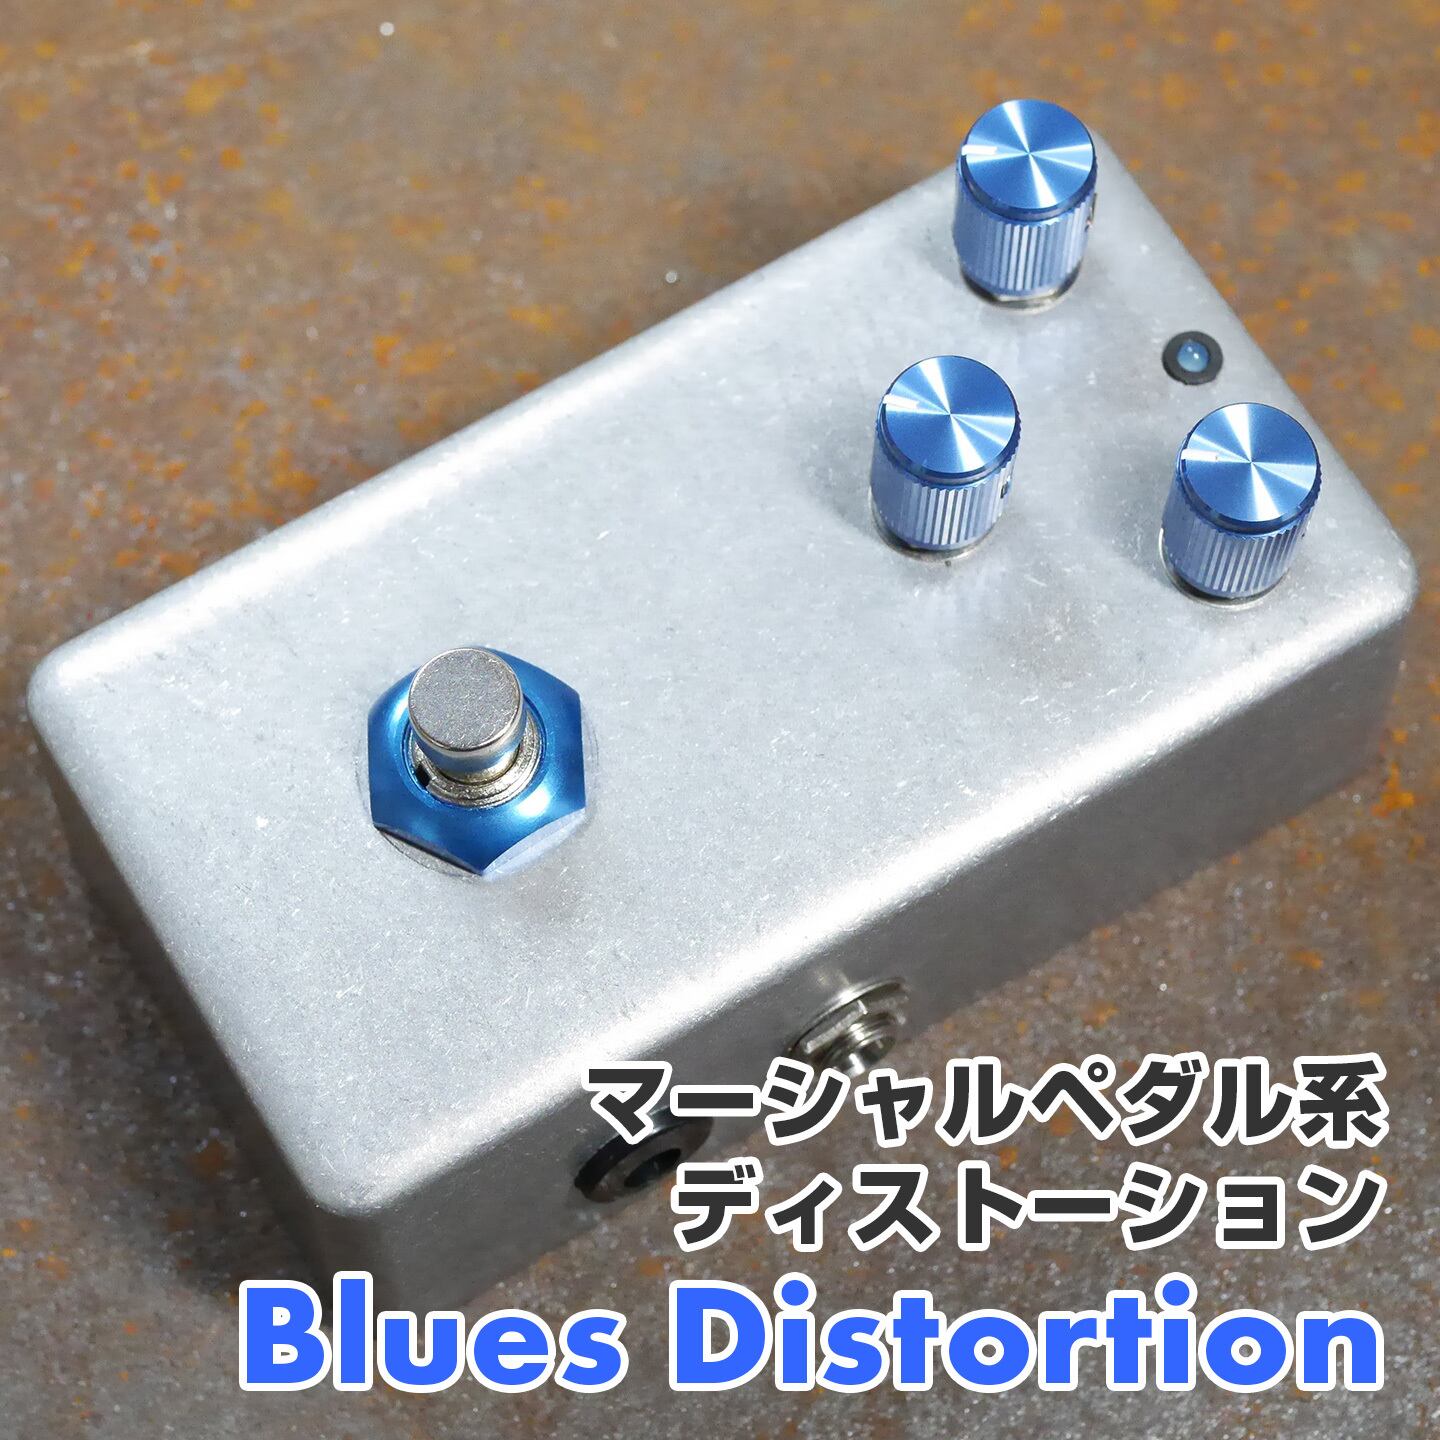 Blues Distortion"Blues Distortion" Marshall系ディストーション《AL STANDARD》